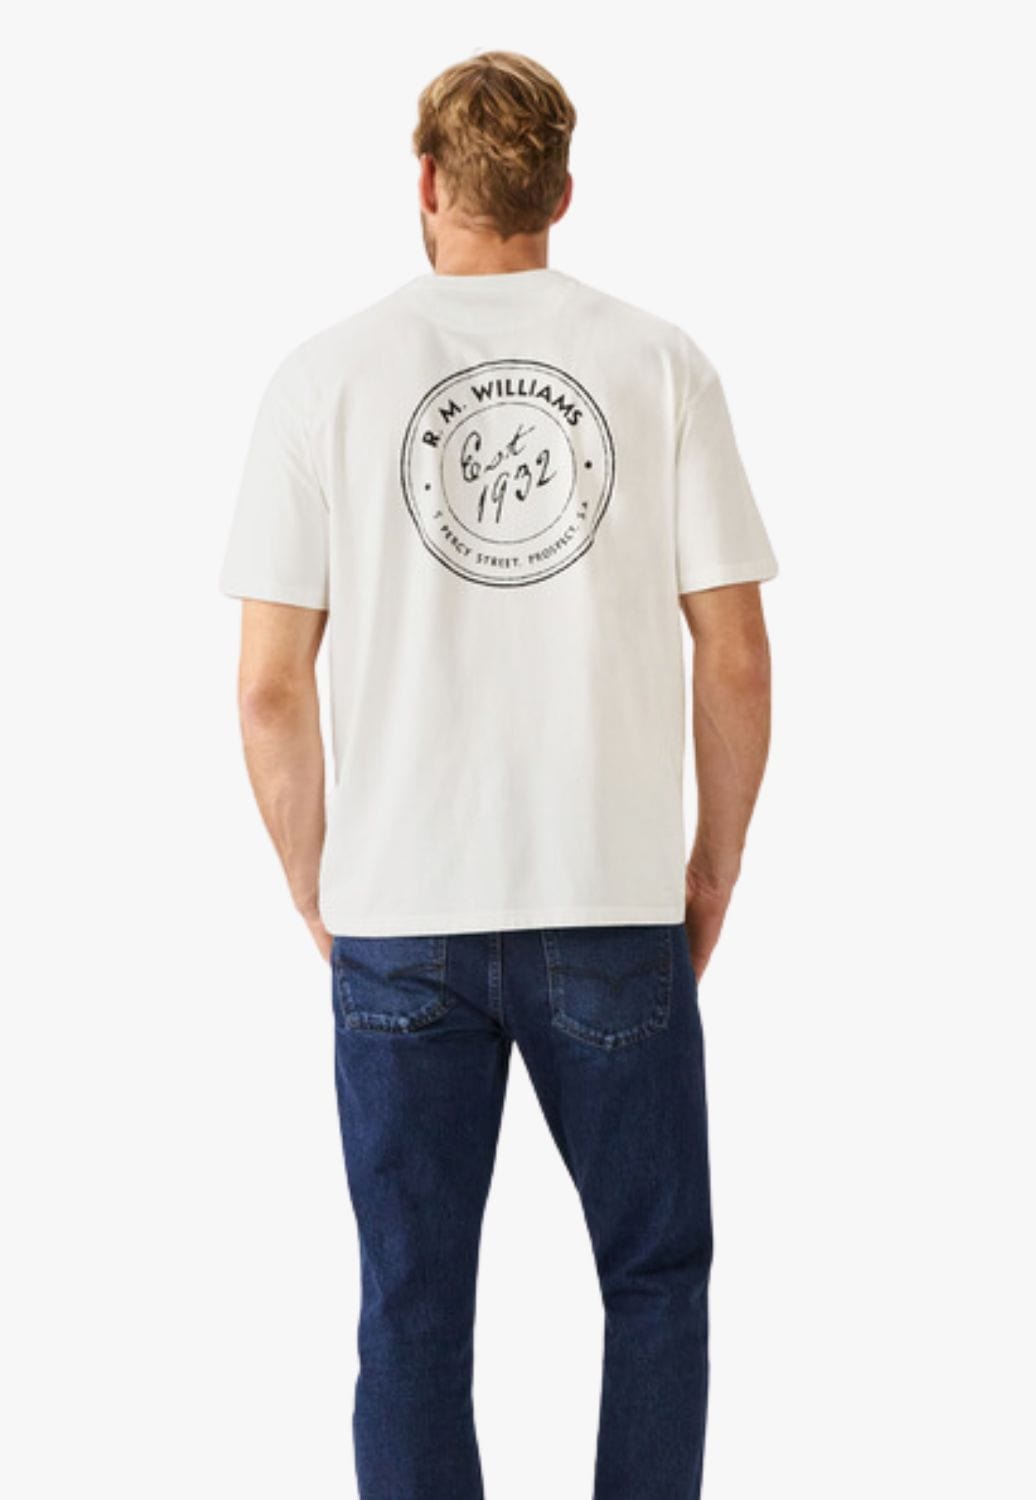 R.M.Williams Scotts Head T-Shirt – Black/White